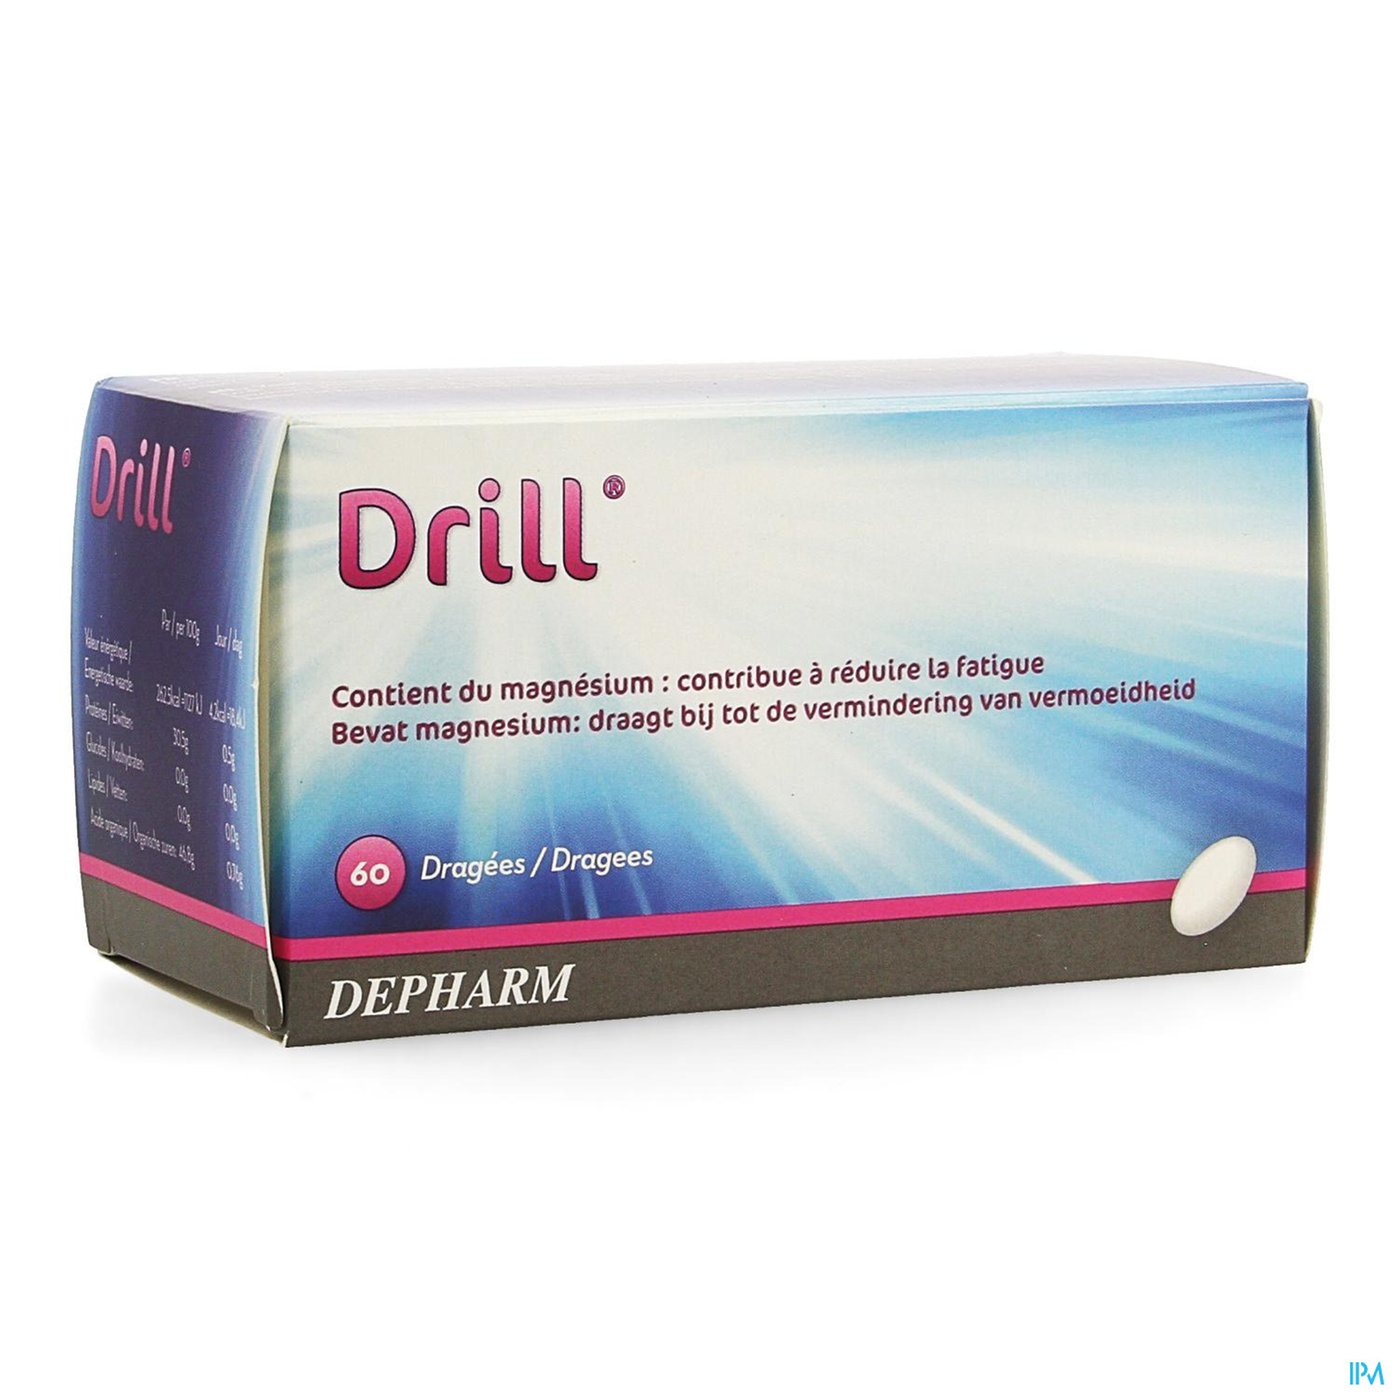 Drill Nf Drag 60 Verv.1497-551 packshot